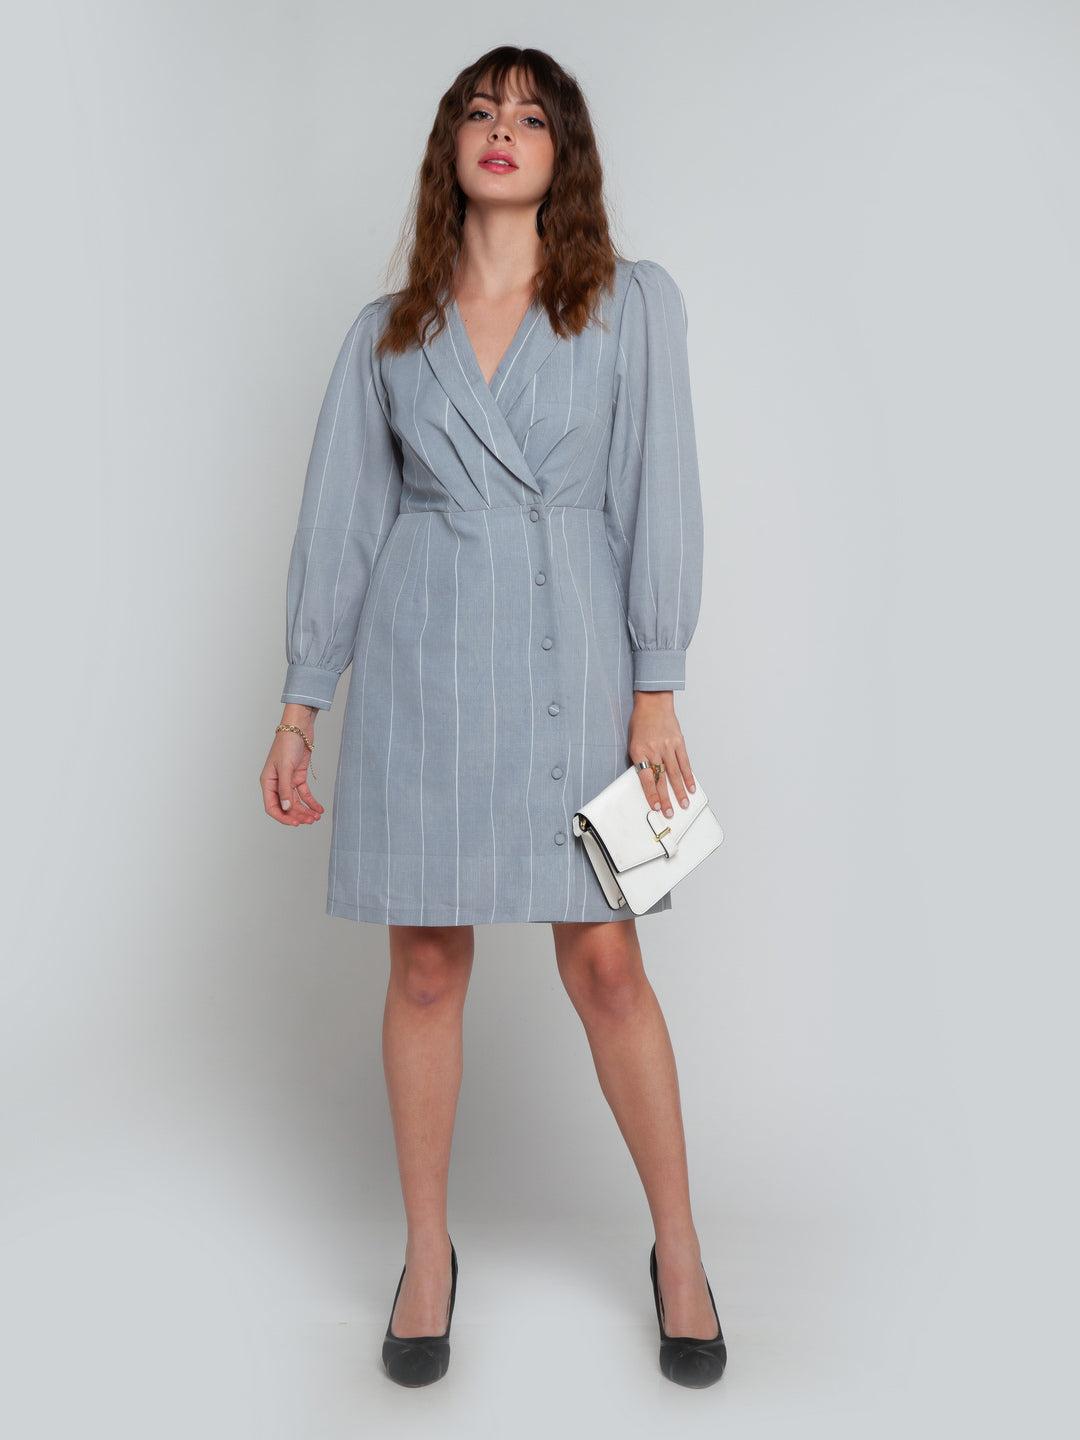 grey striped short dress for women